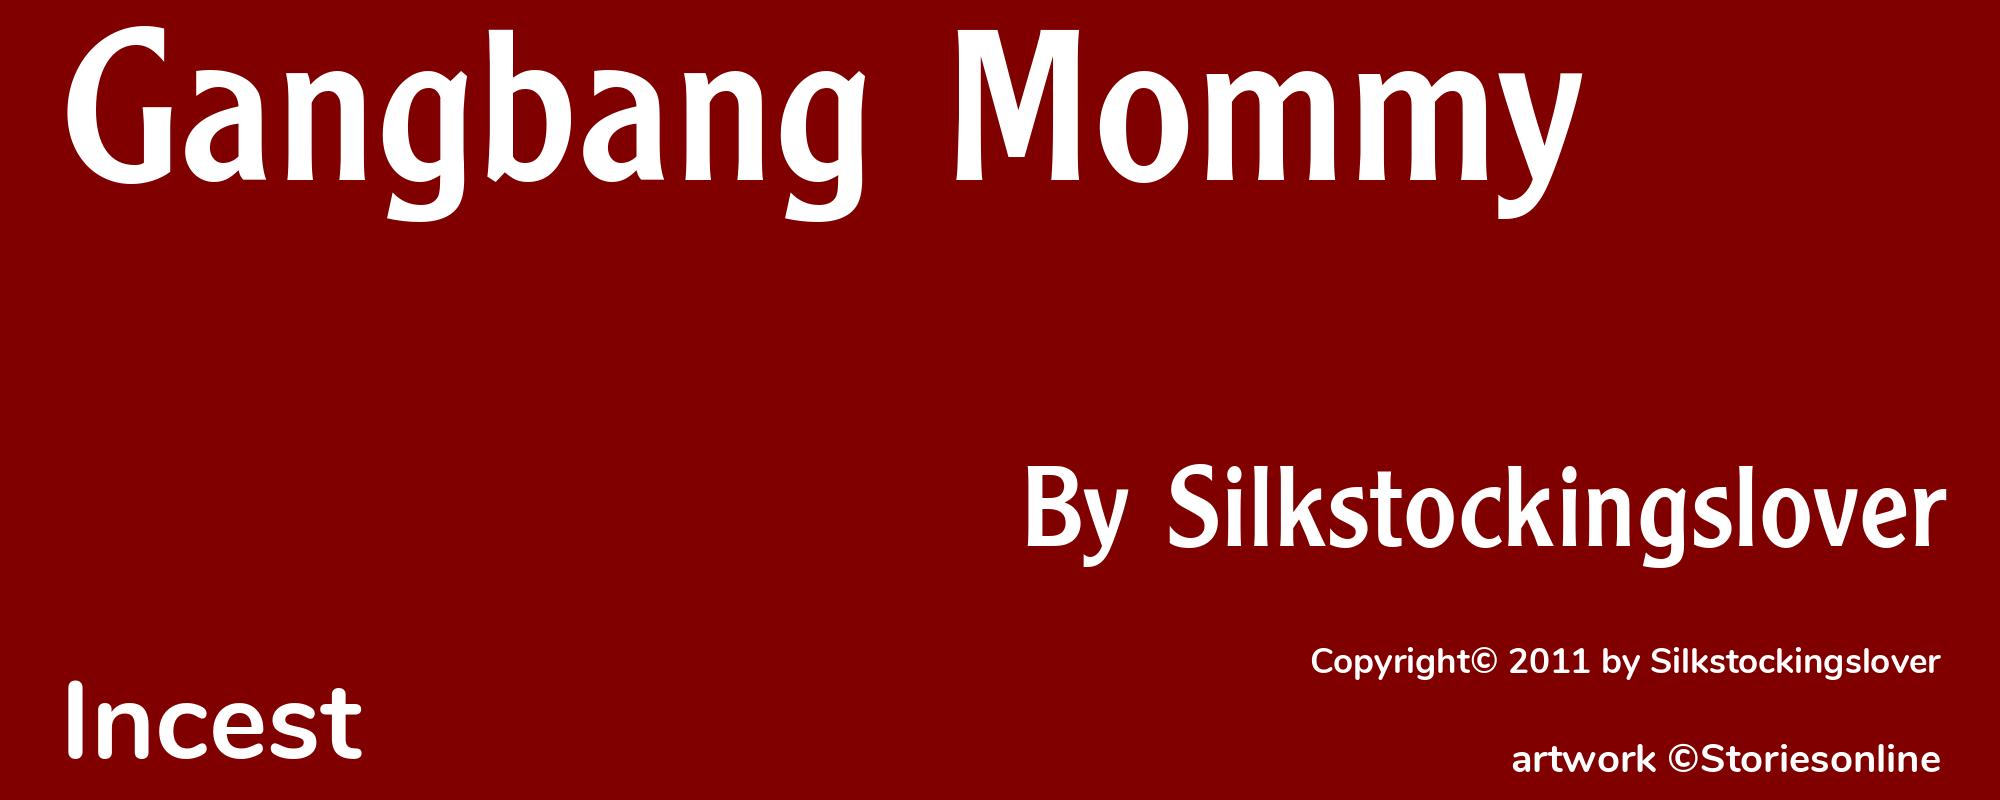 Gangbang Mommy - Cover